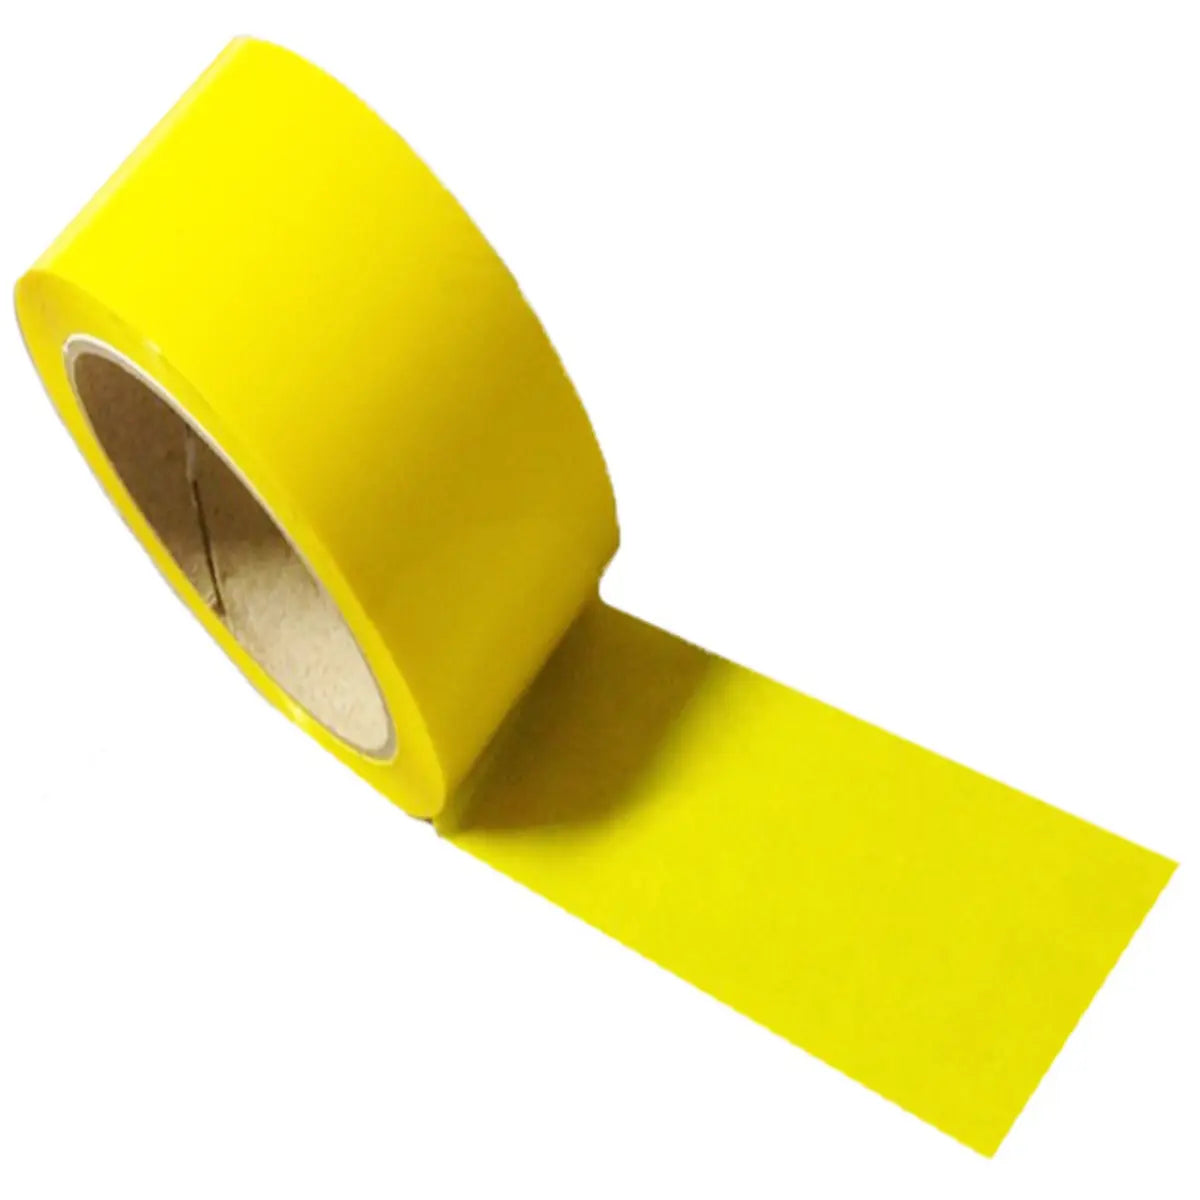 coloured adhesive tape - yellow